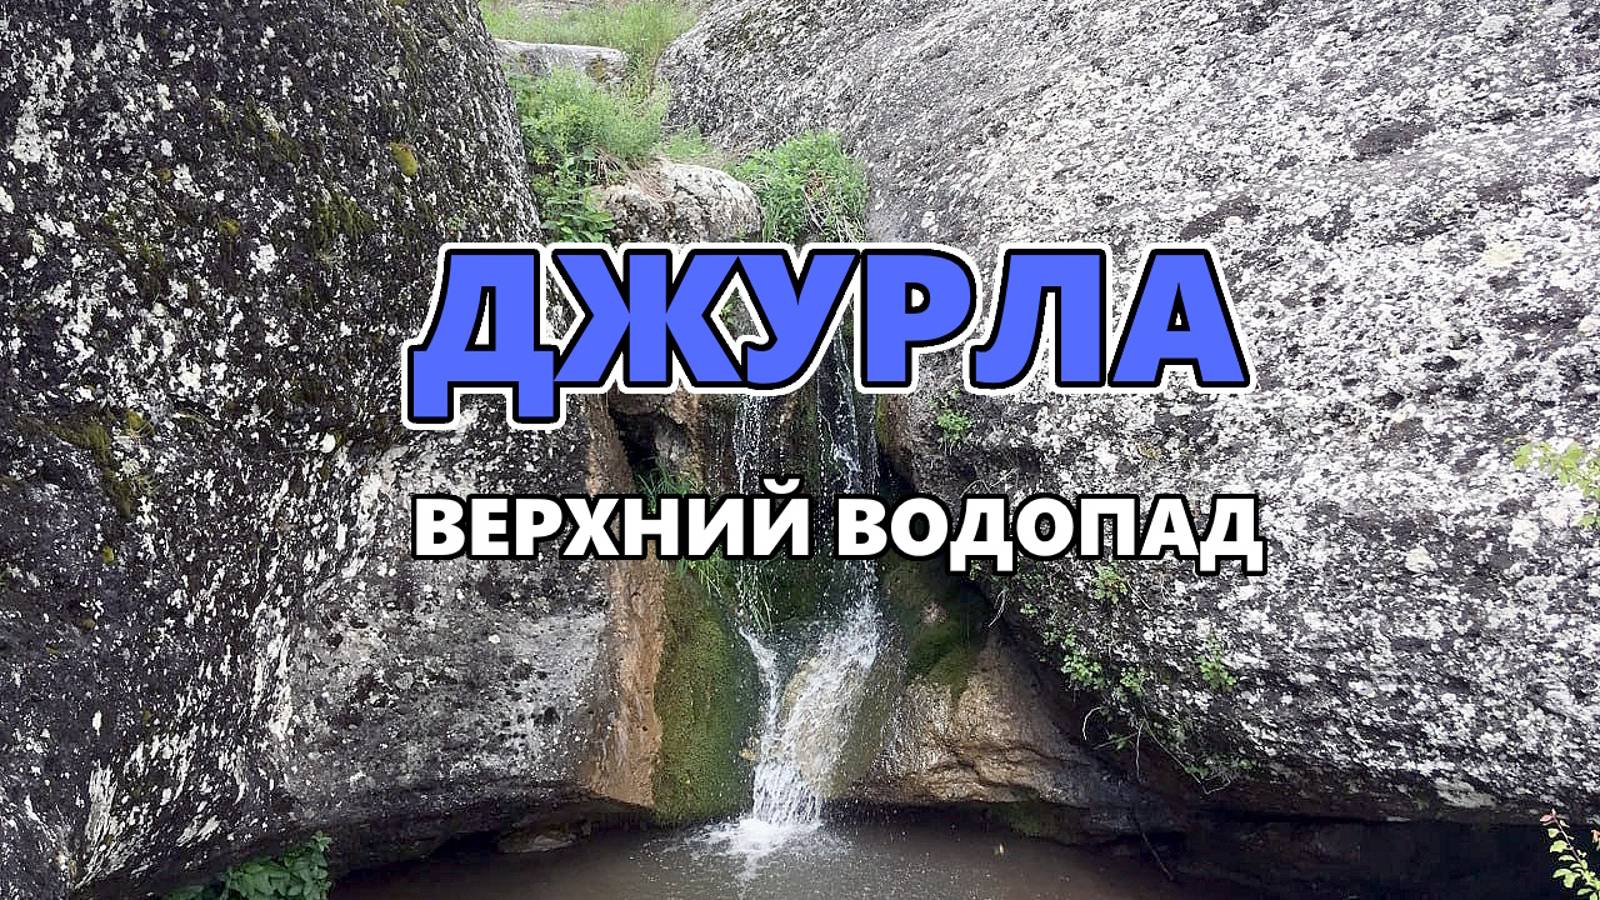 Джурла. Верхний водопад. Крым